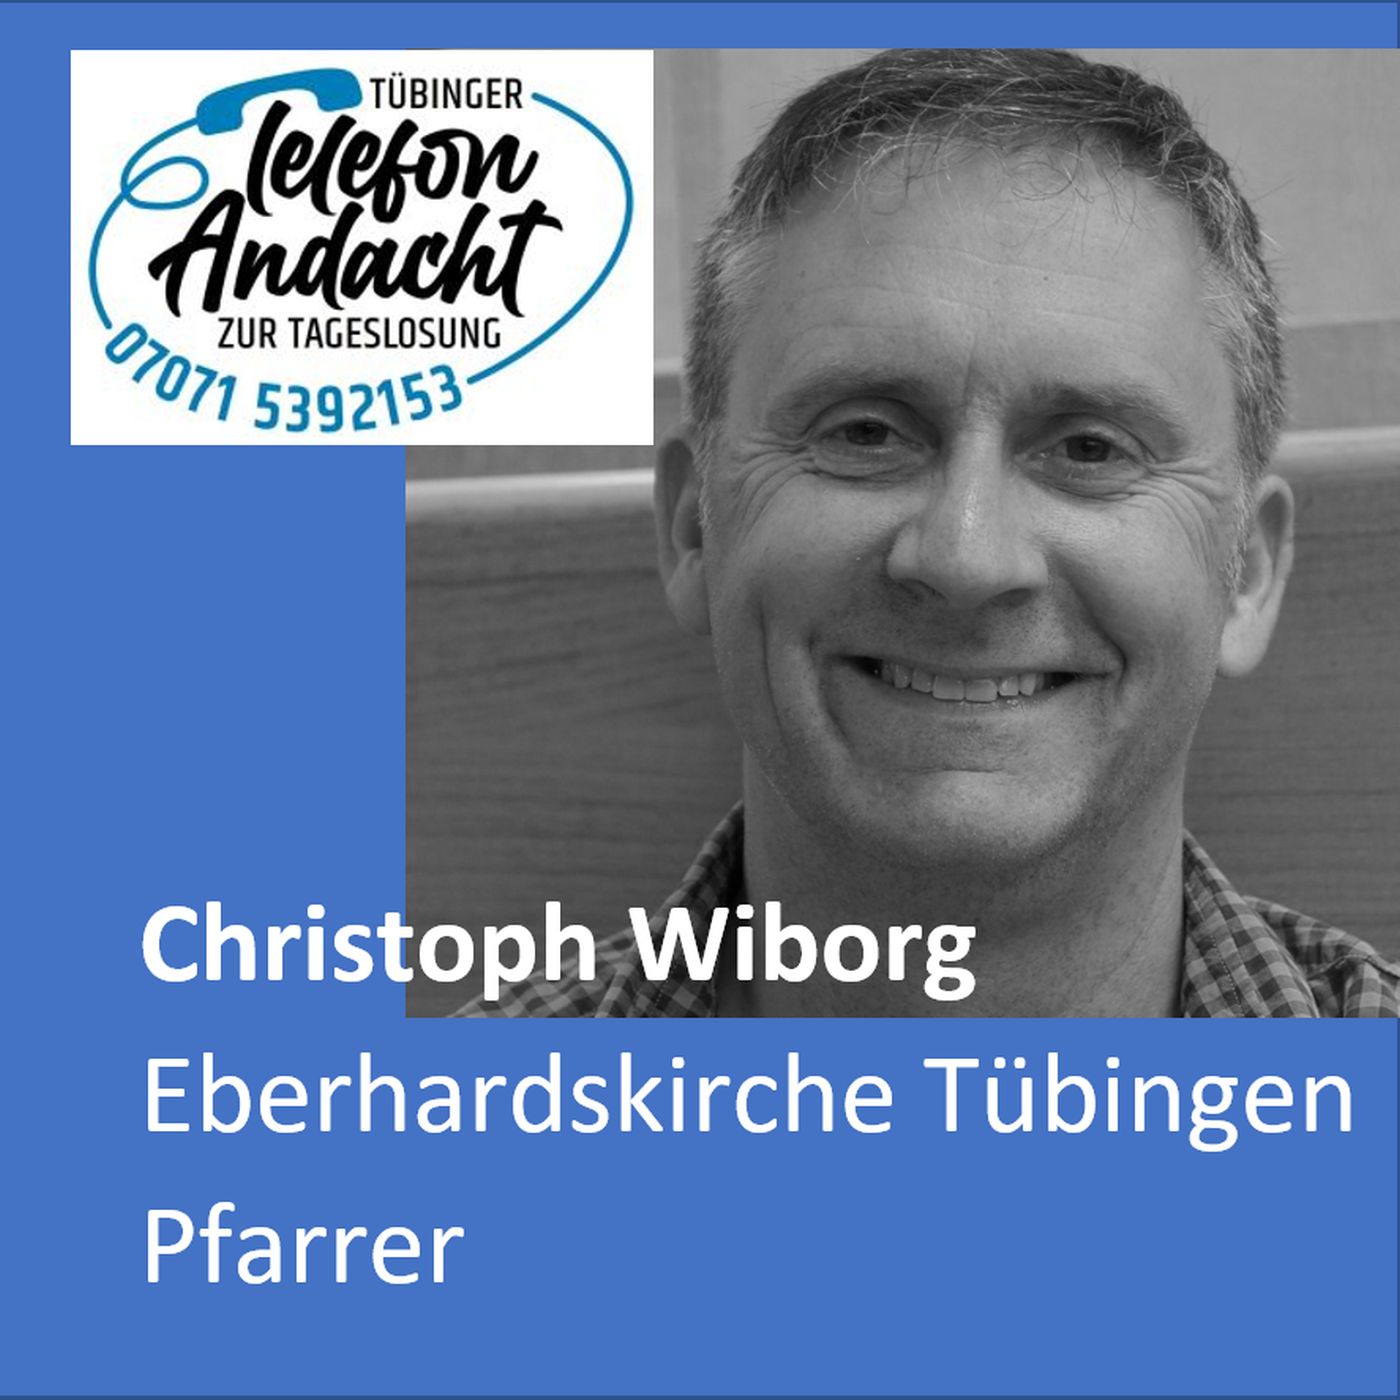 24 04 16 Christoph Wiborg